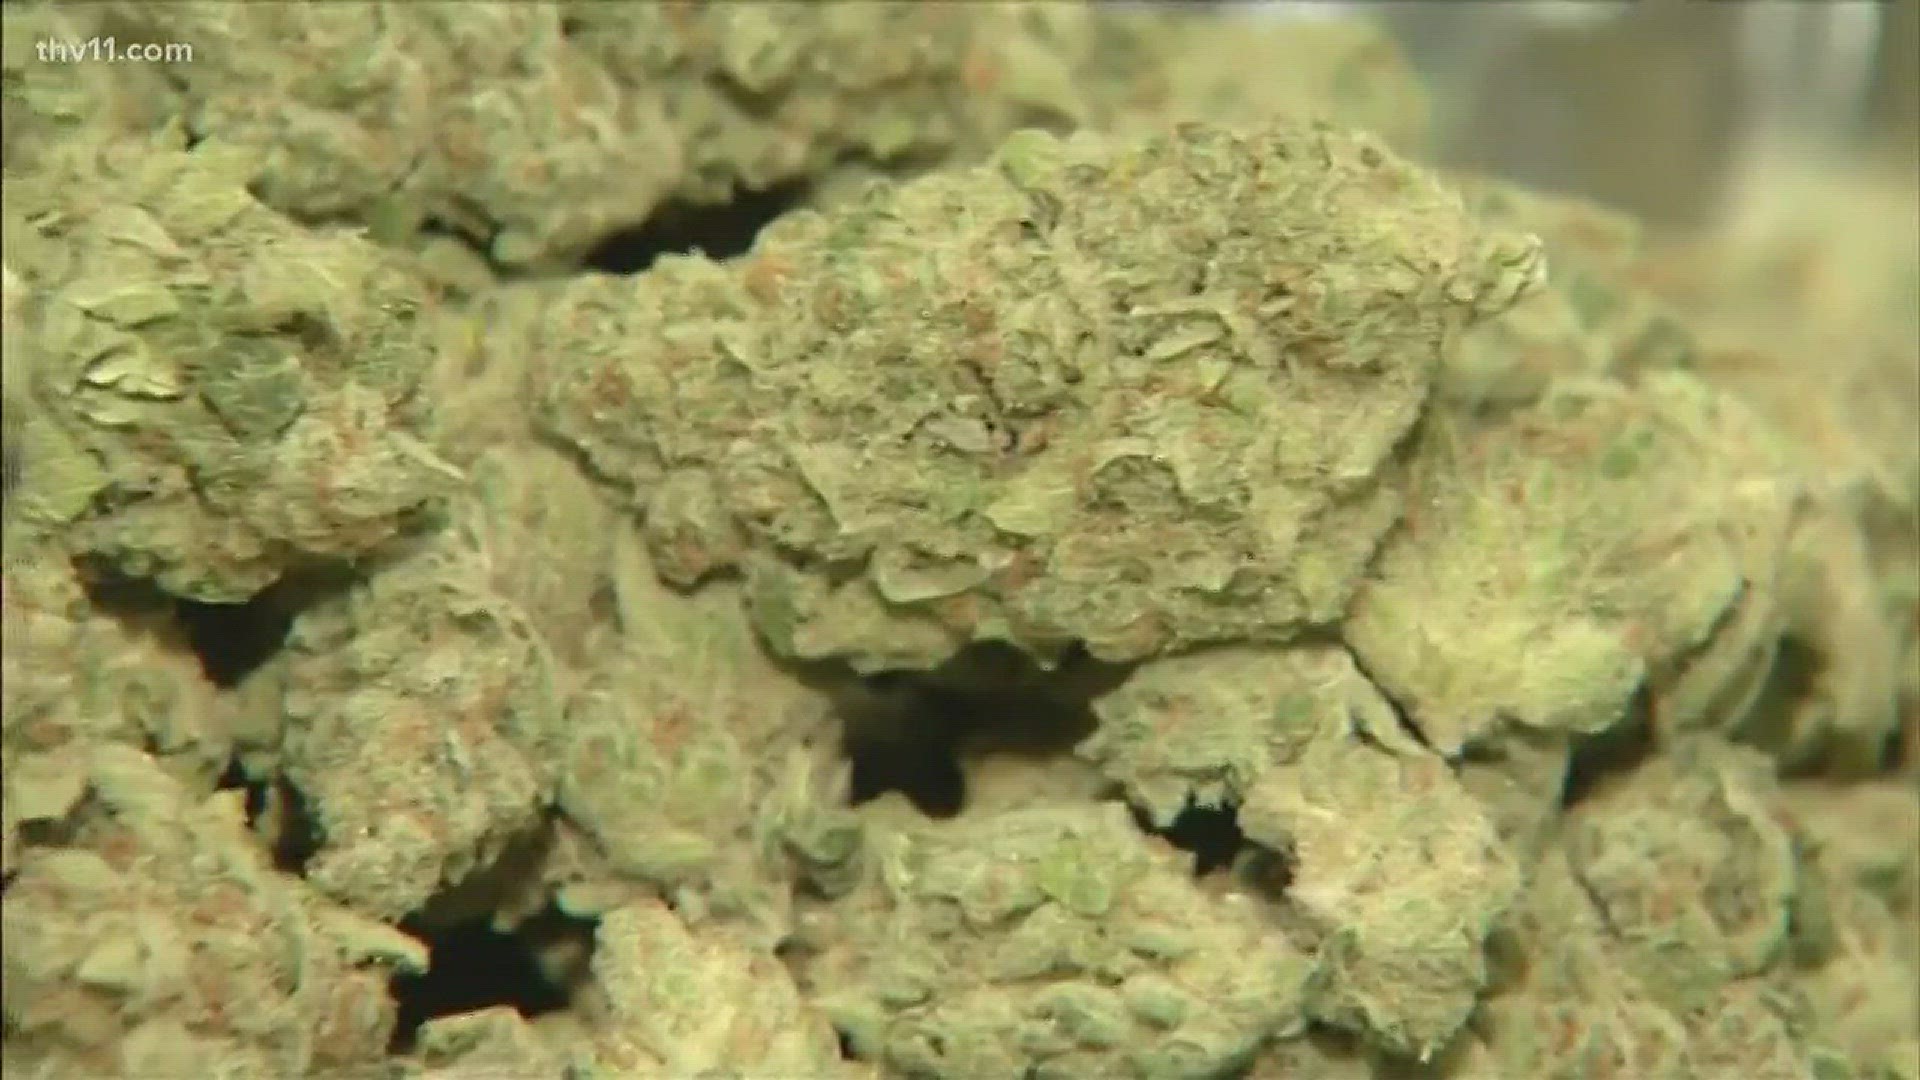 Judge halts issuing medical marijuana growing permits